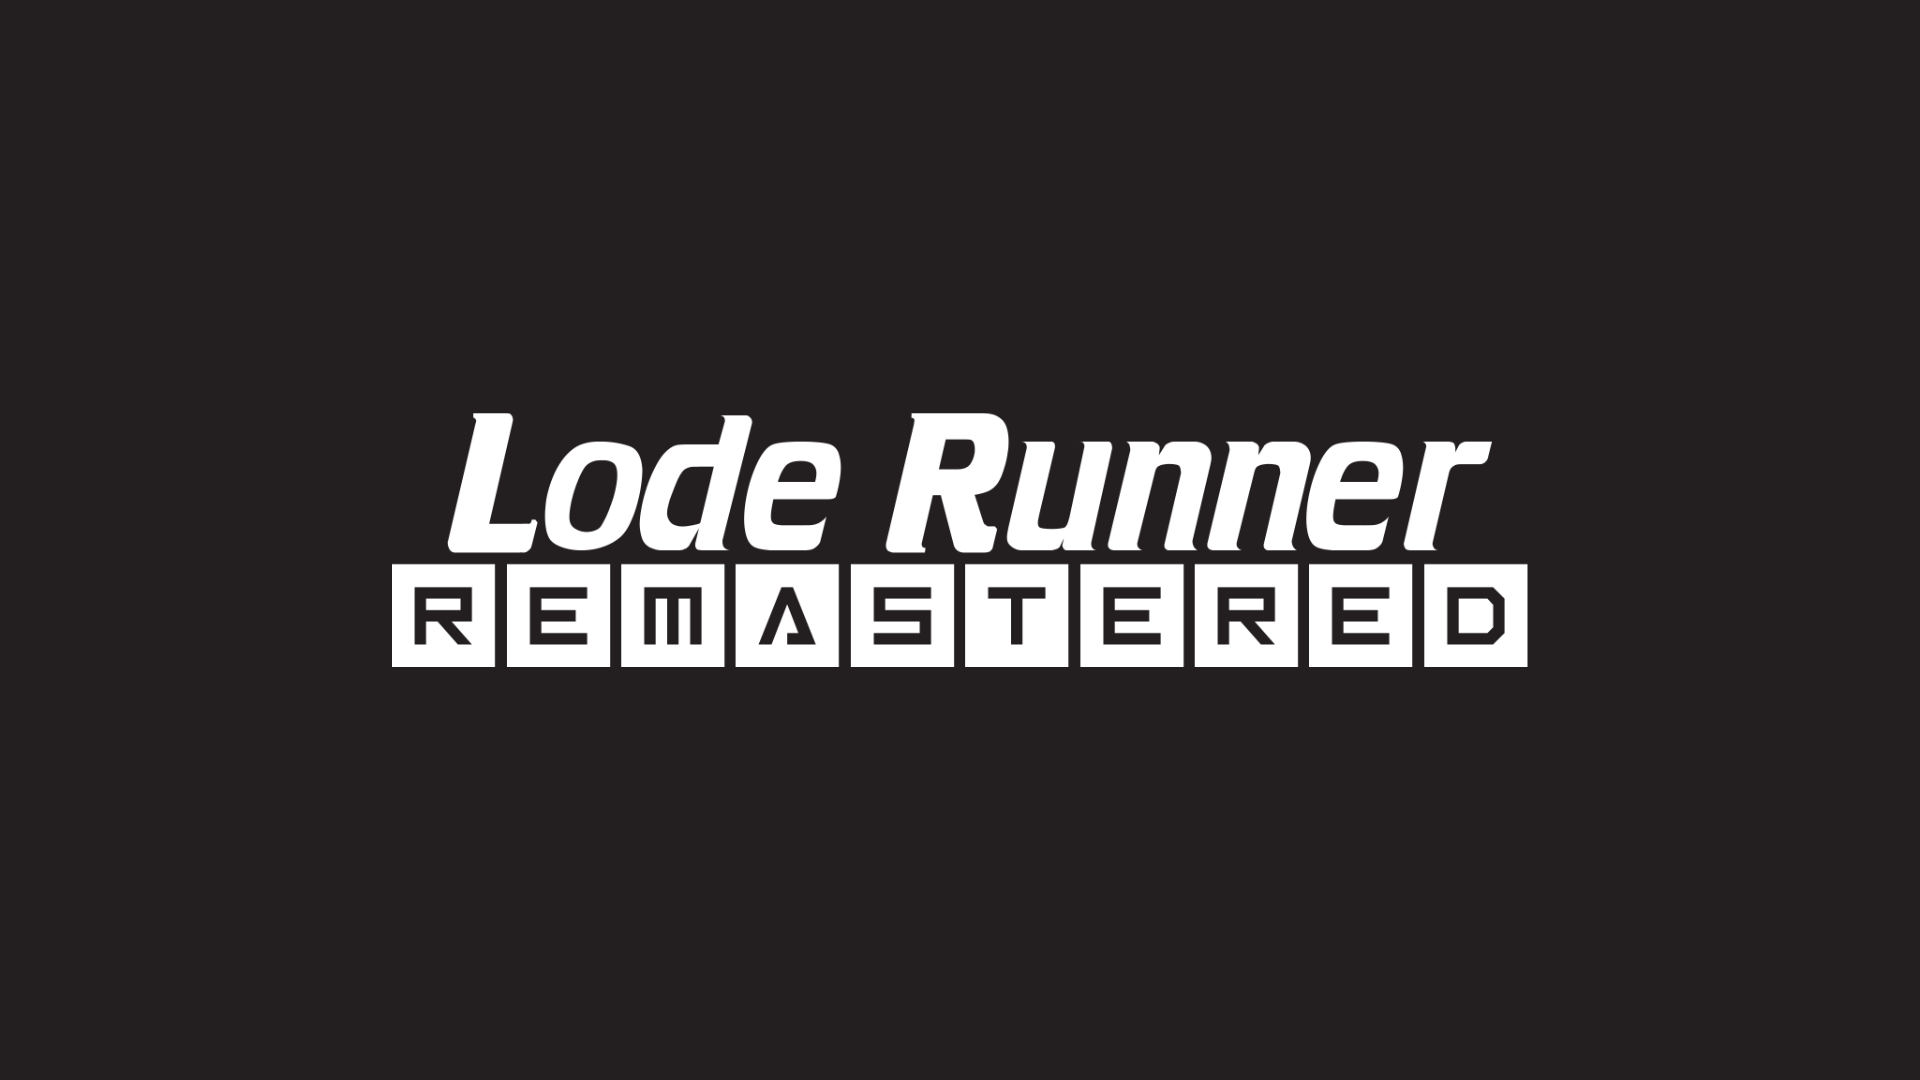 LodeRunner Remastered